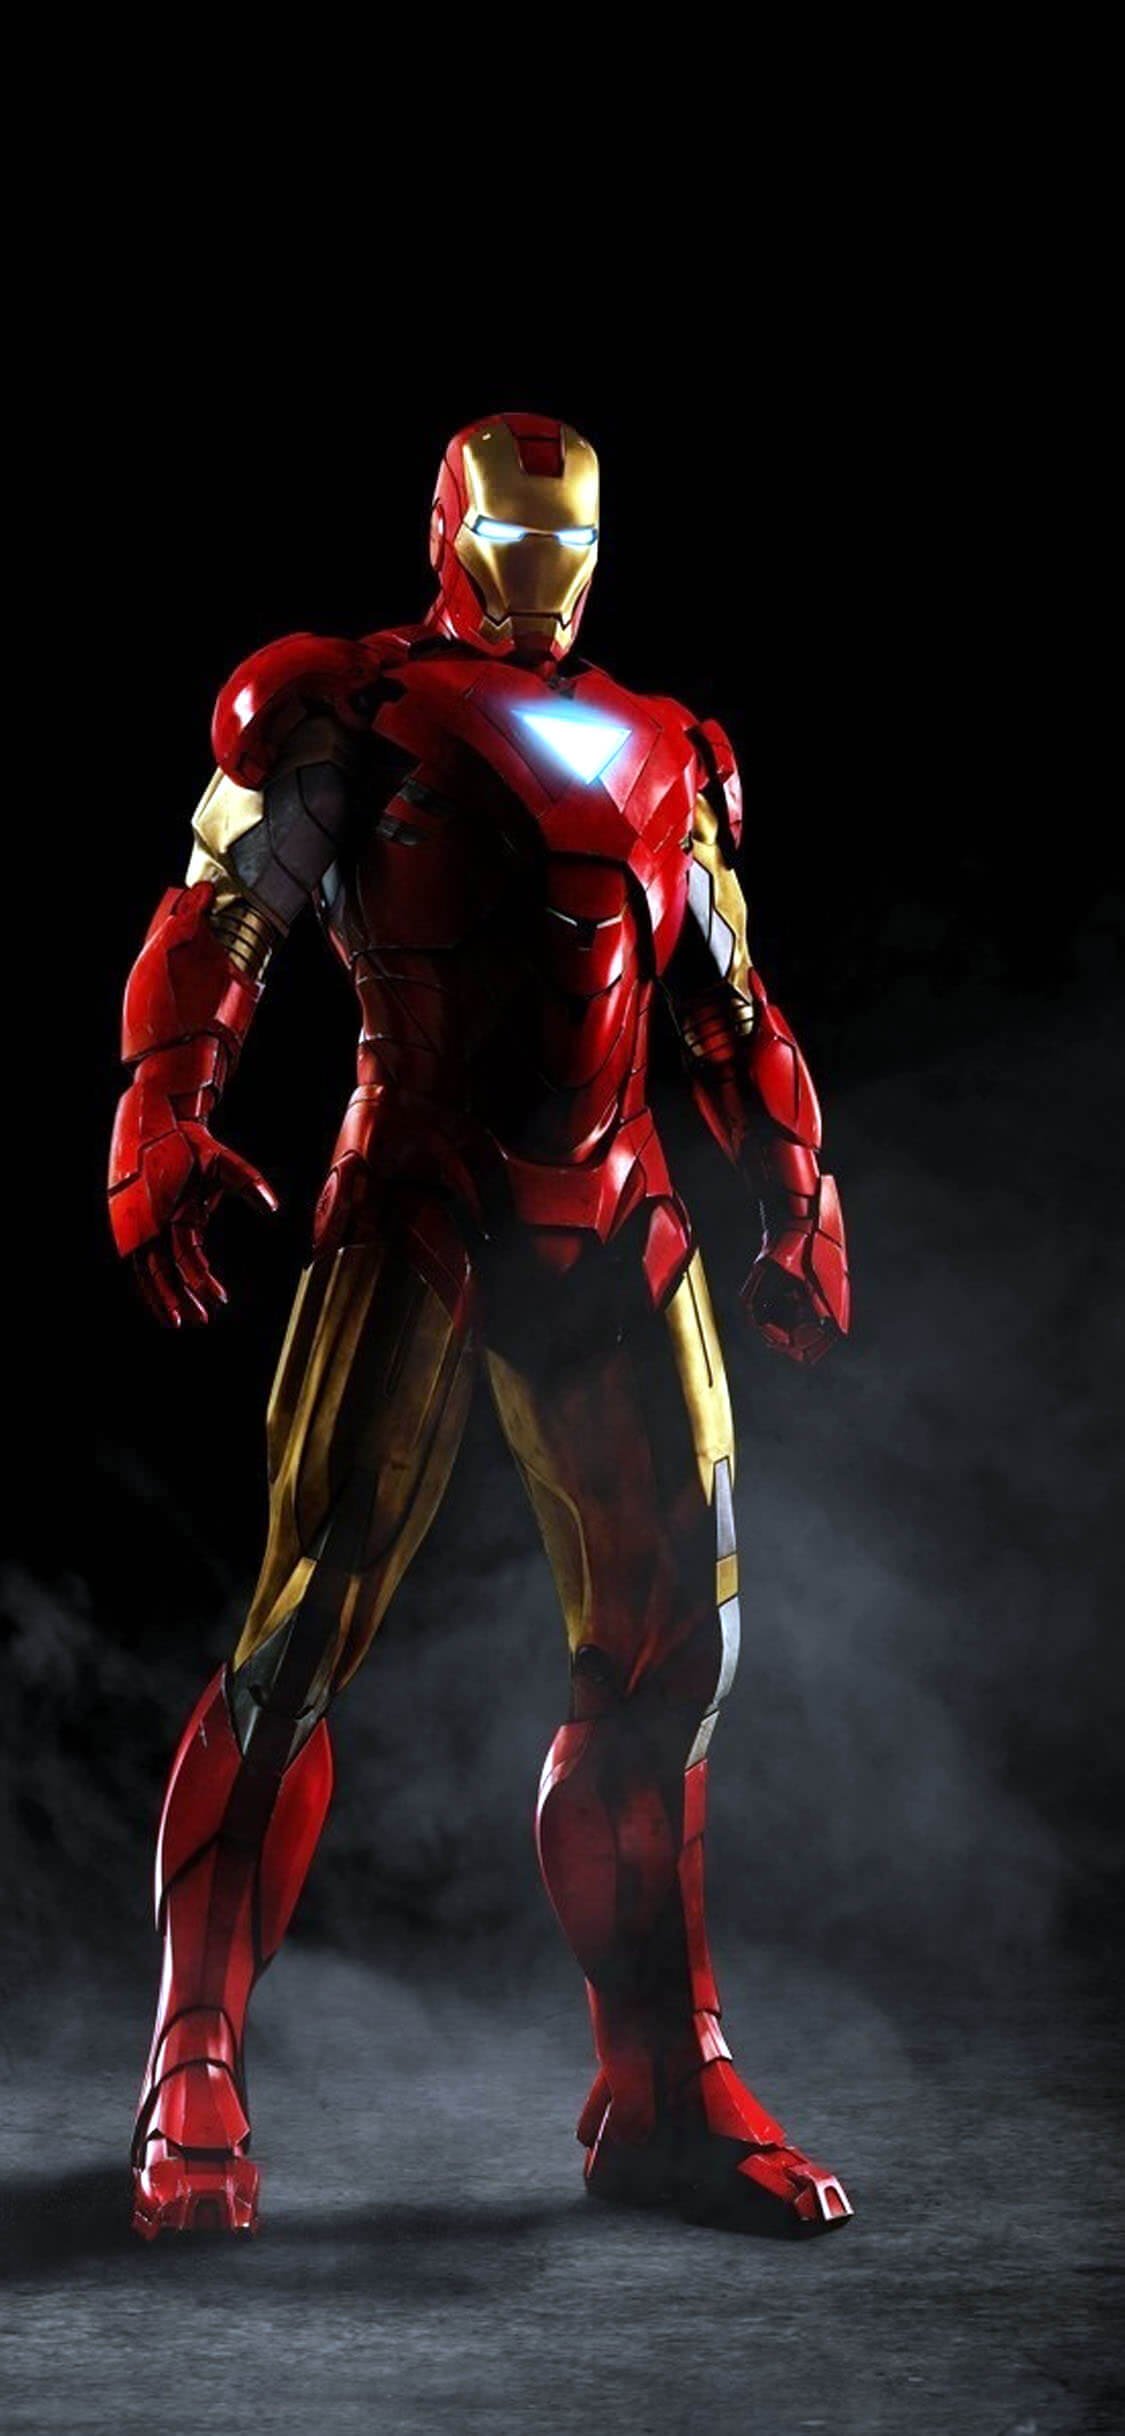 man wallpaper,iron man,superhero,action figure,fictional character,toy